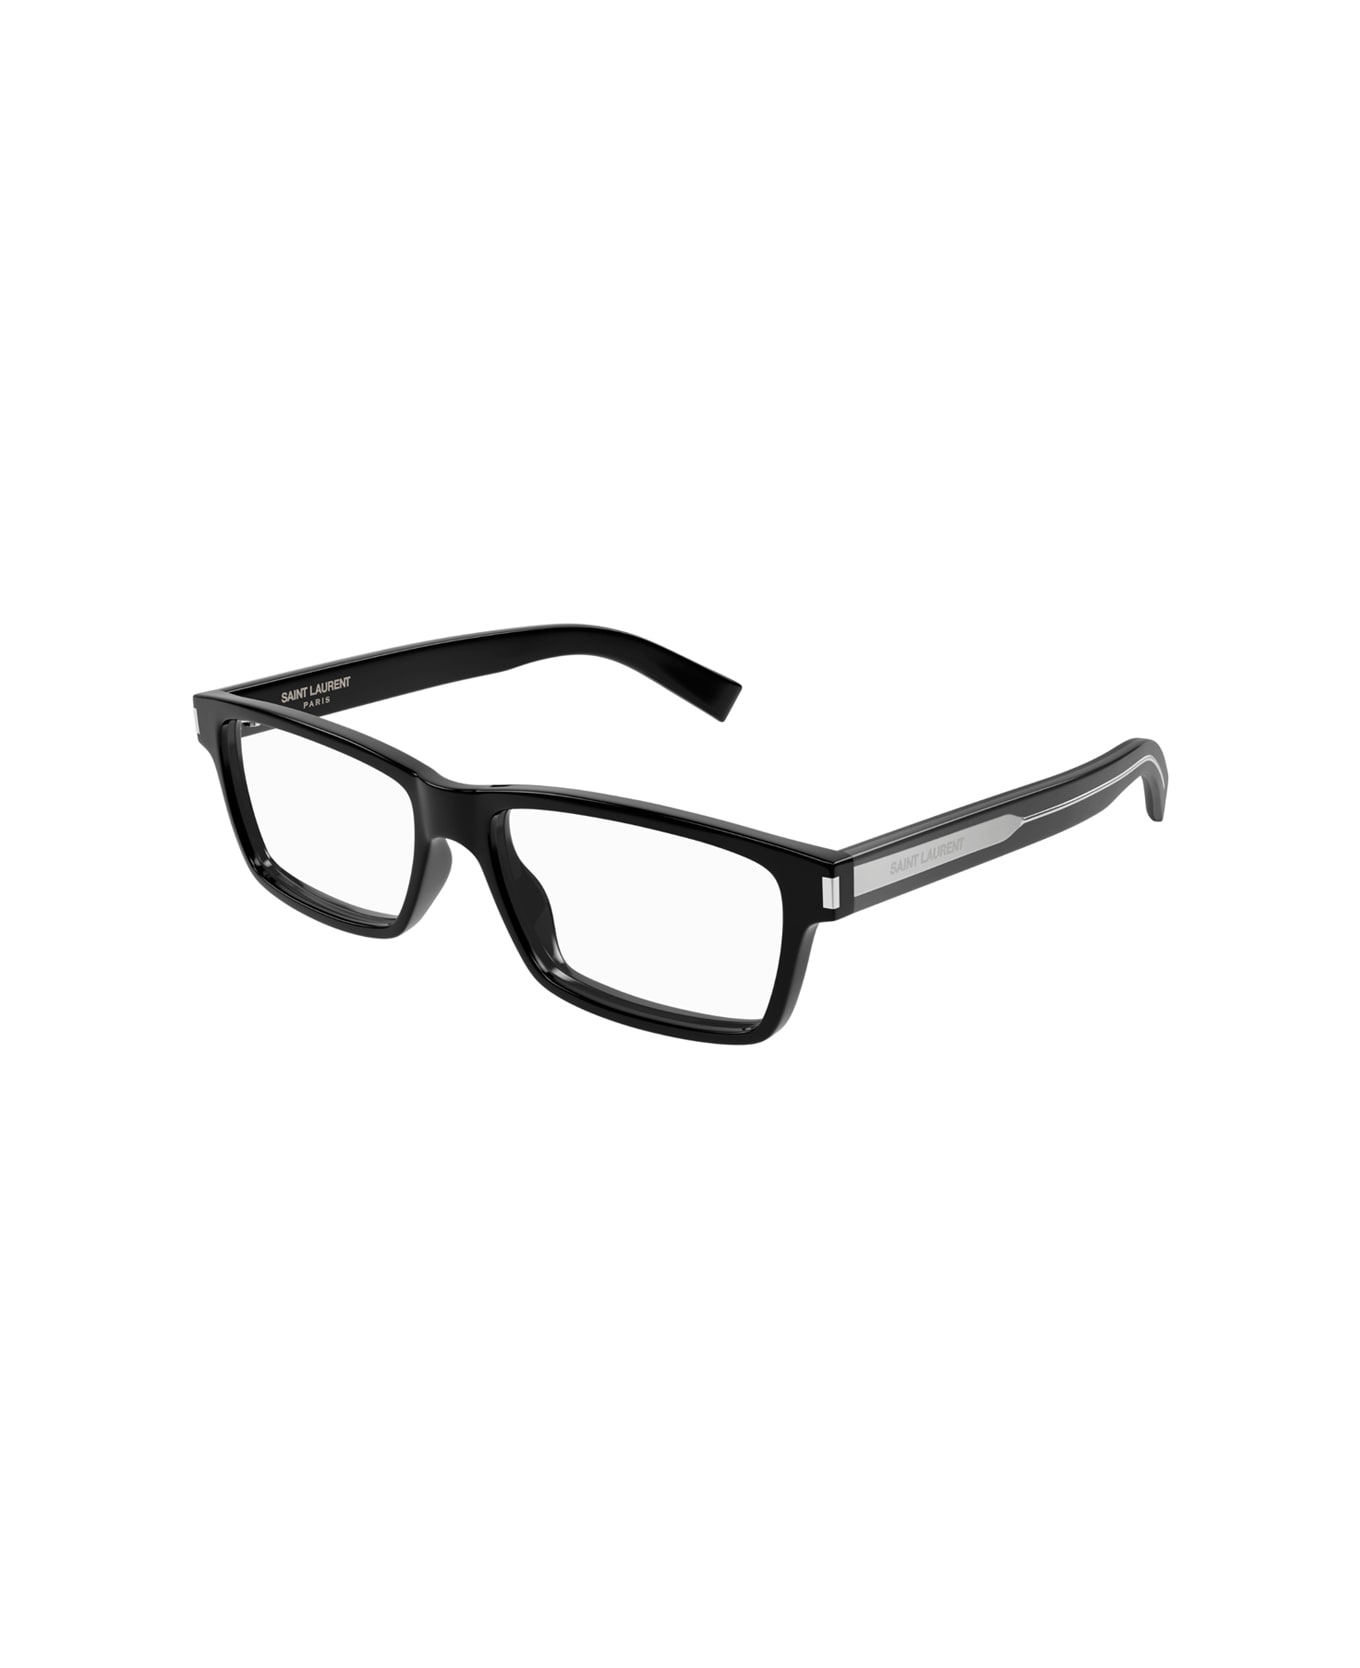 Saint Laurent Eyewear Sl 622 001 Glasses - Nero